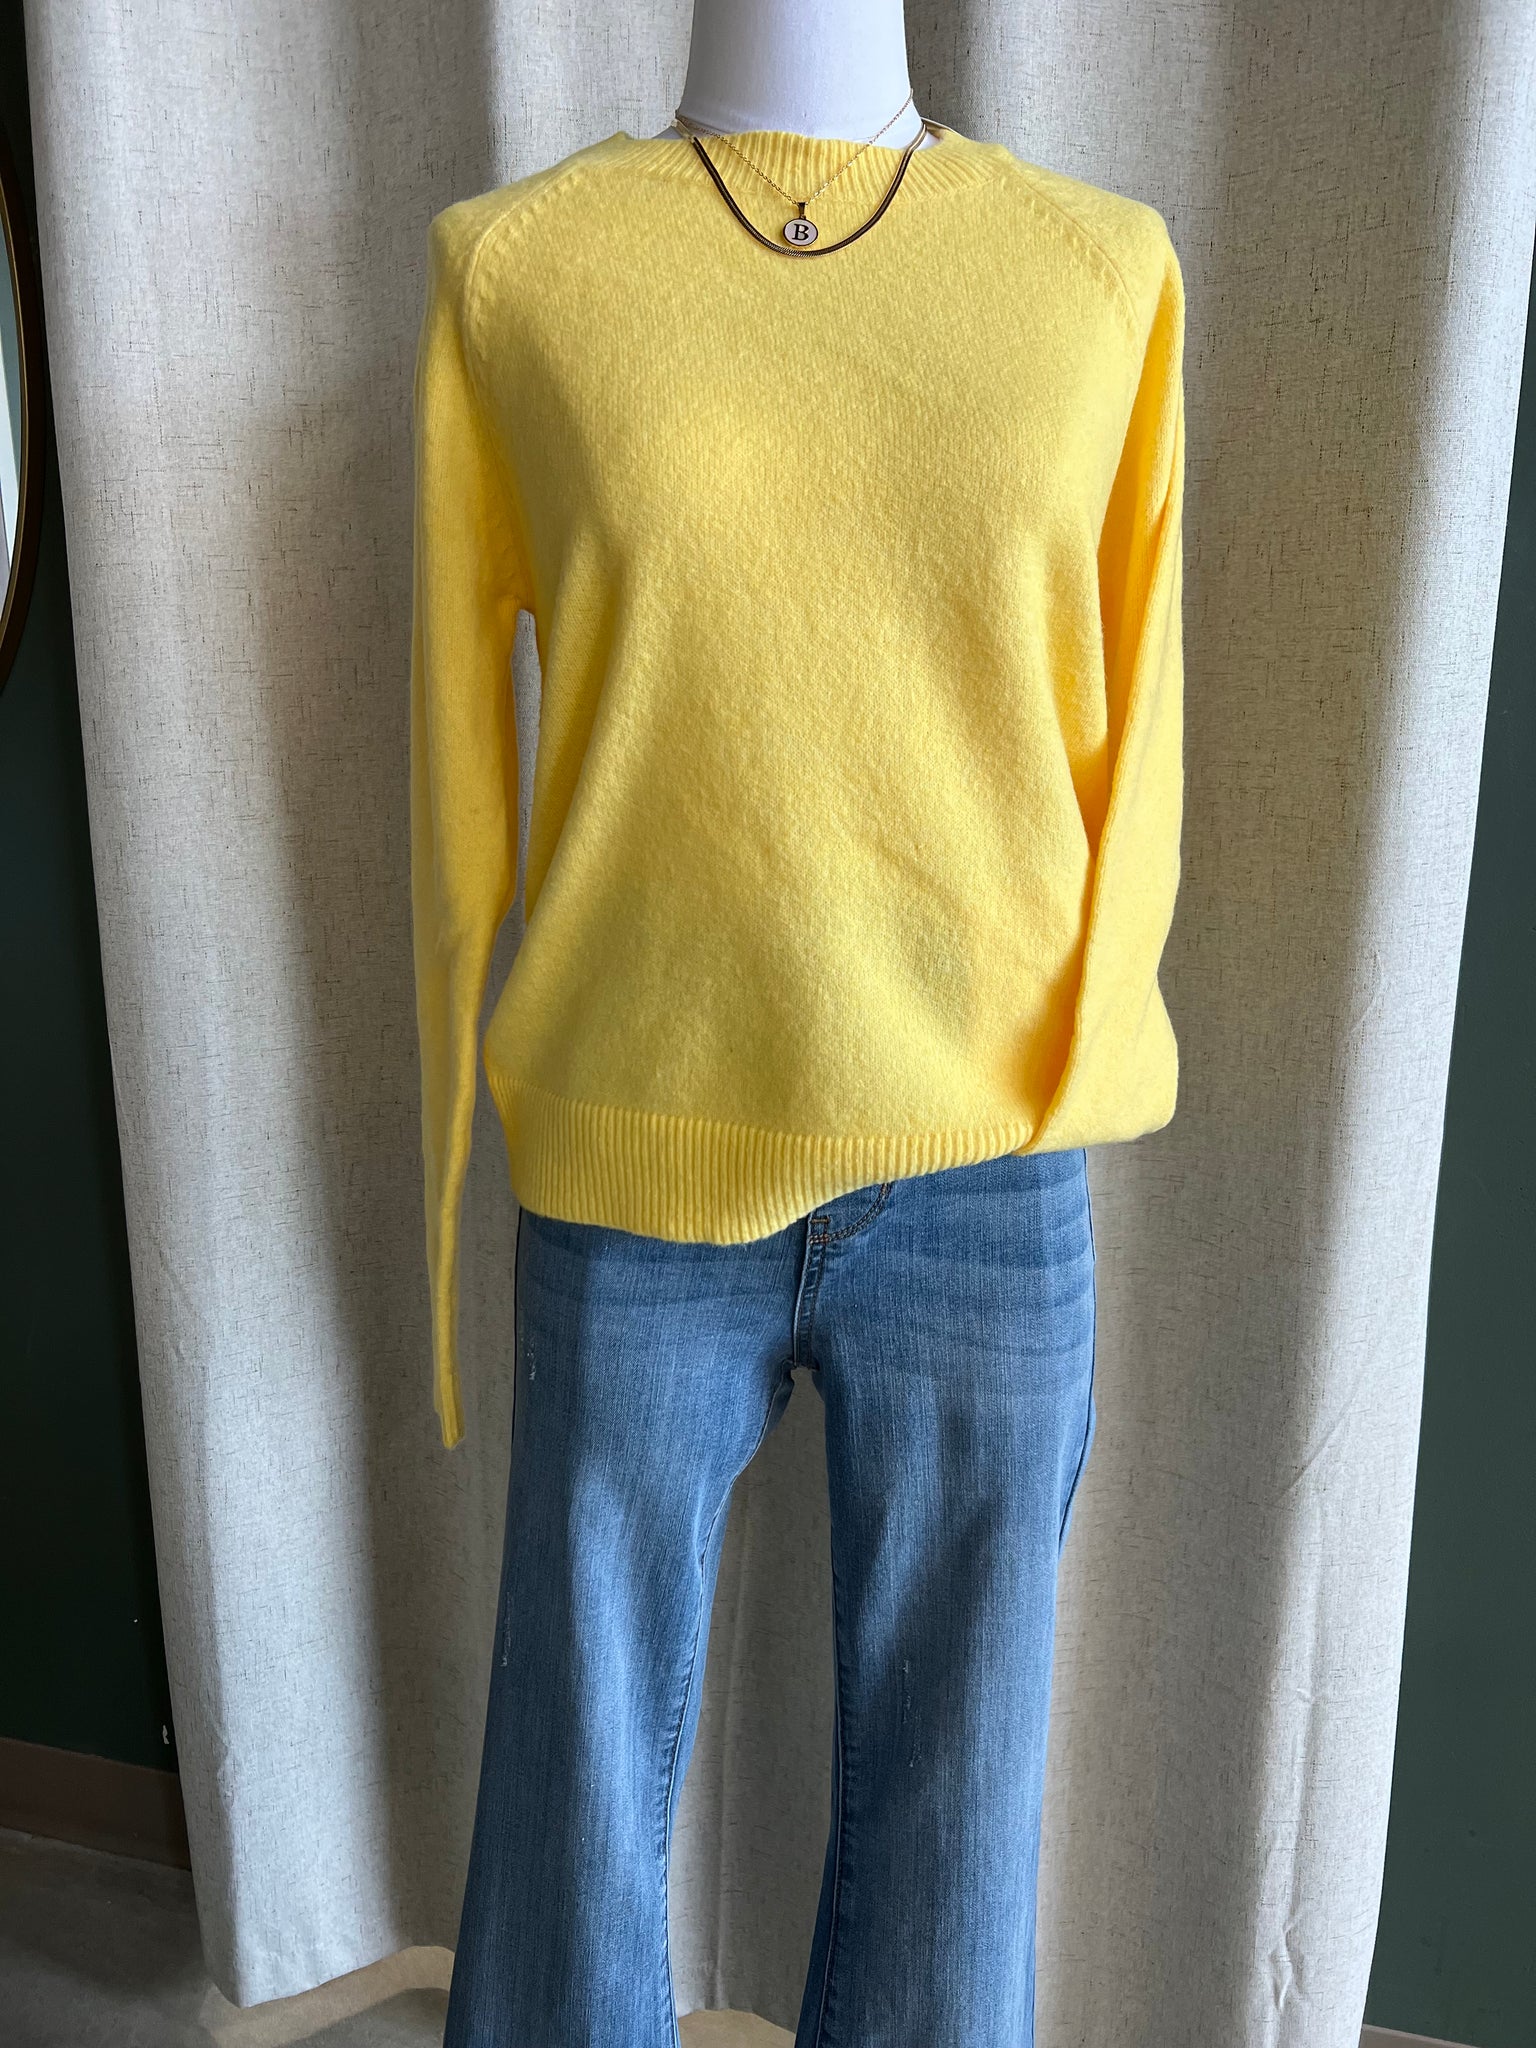 Yellow Crew Neck Soft Sweater